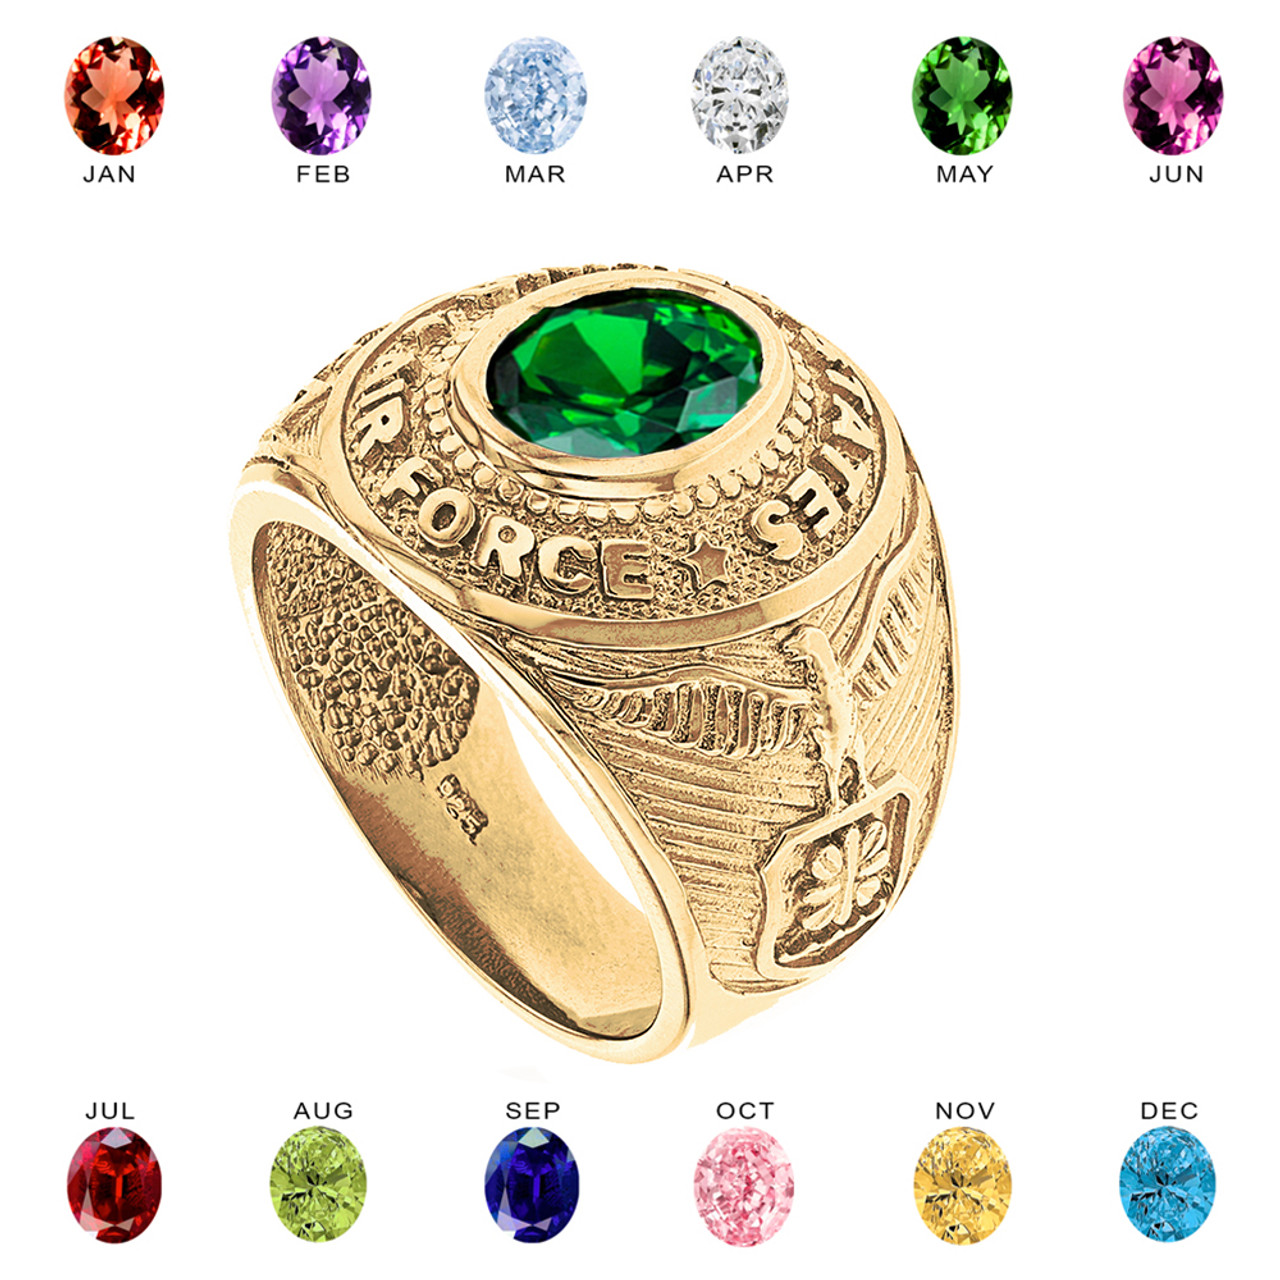 June Birthstone Ring | Pearl Glowstone Ring | Patrick Adair Designs